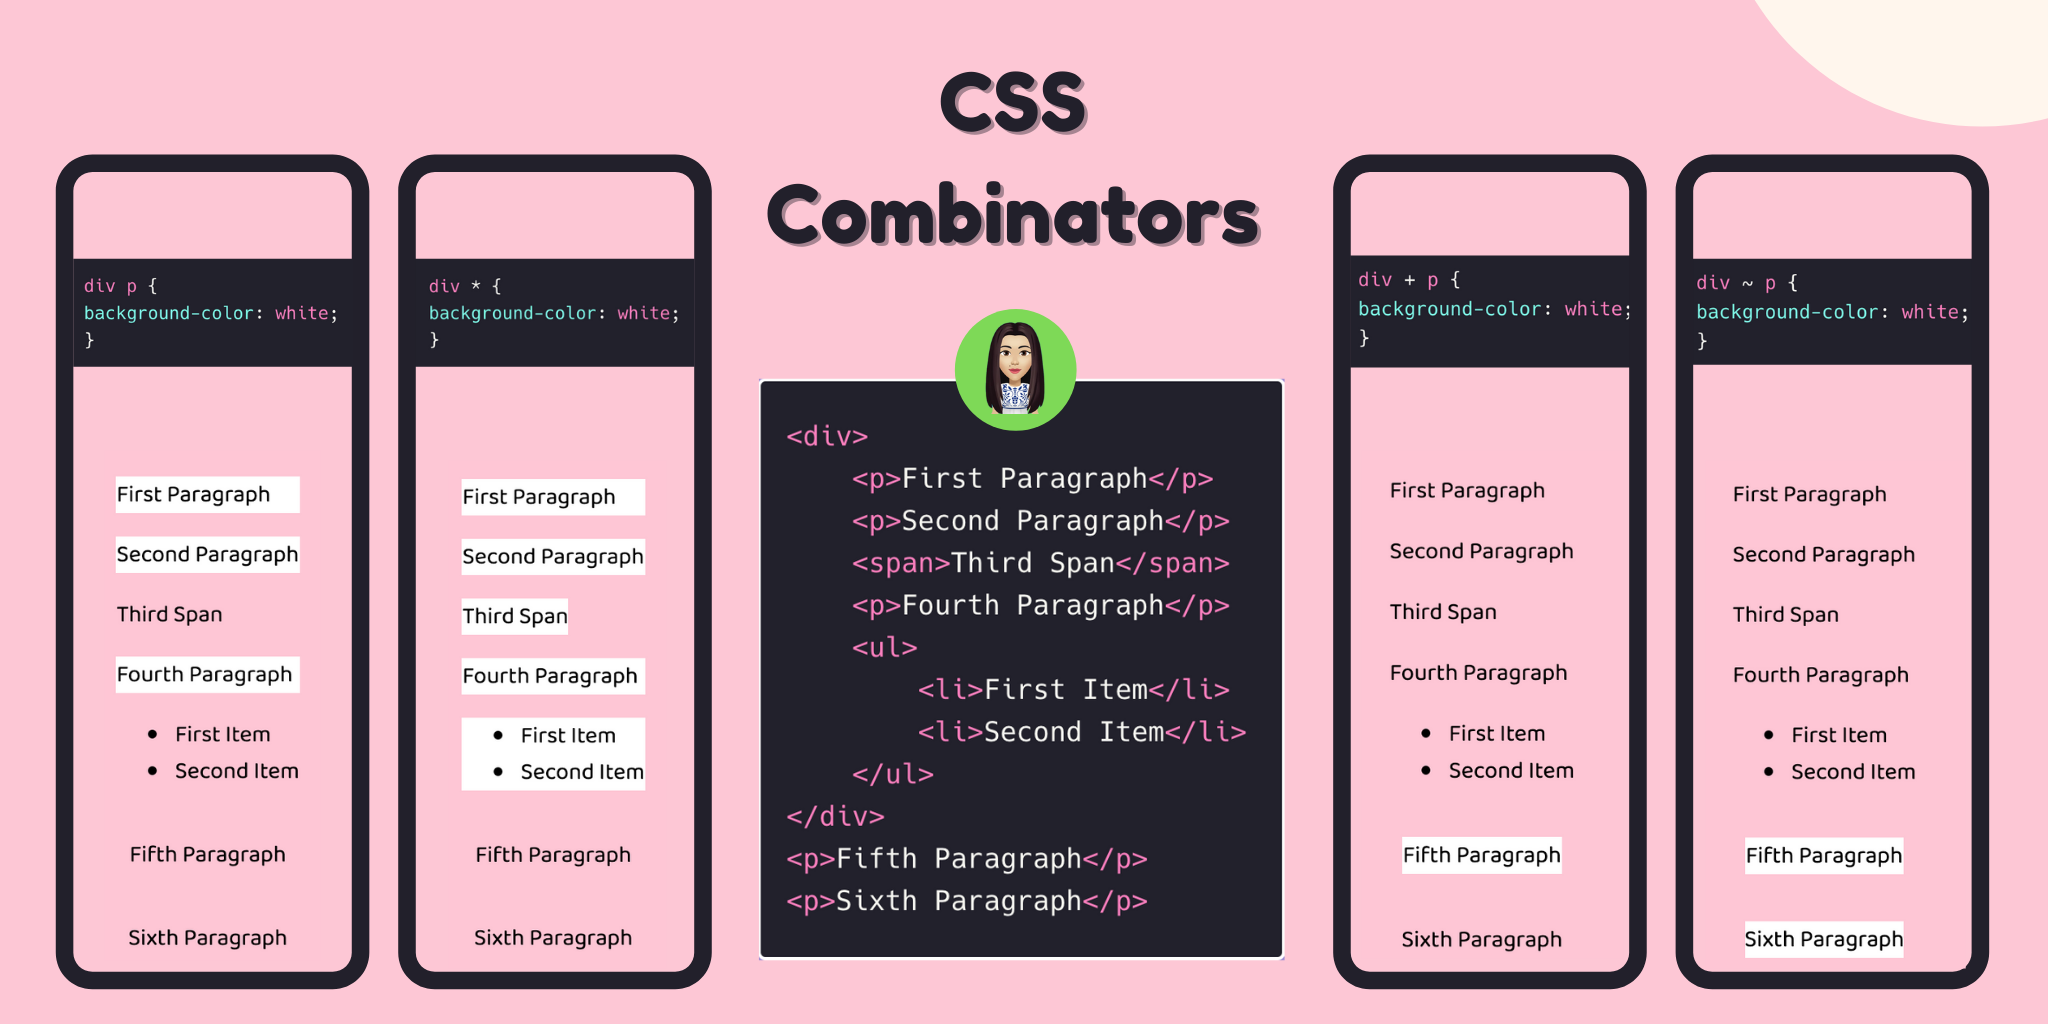 CSS Combinators